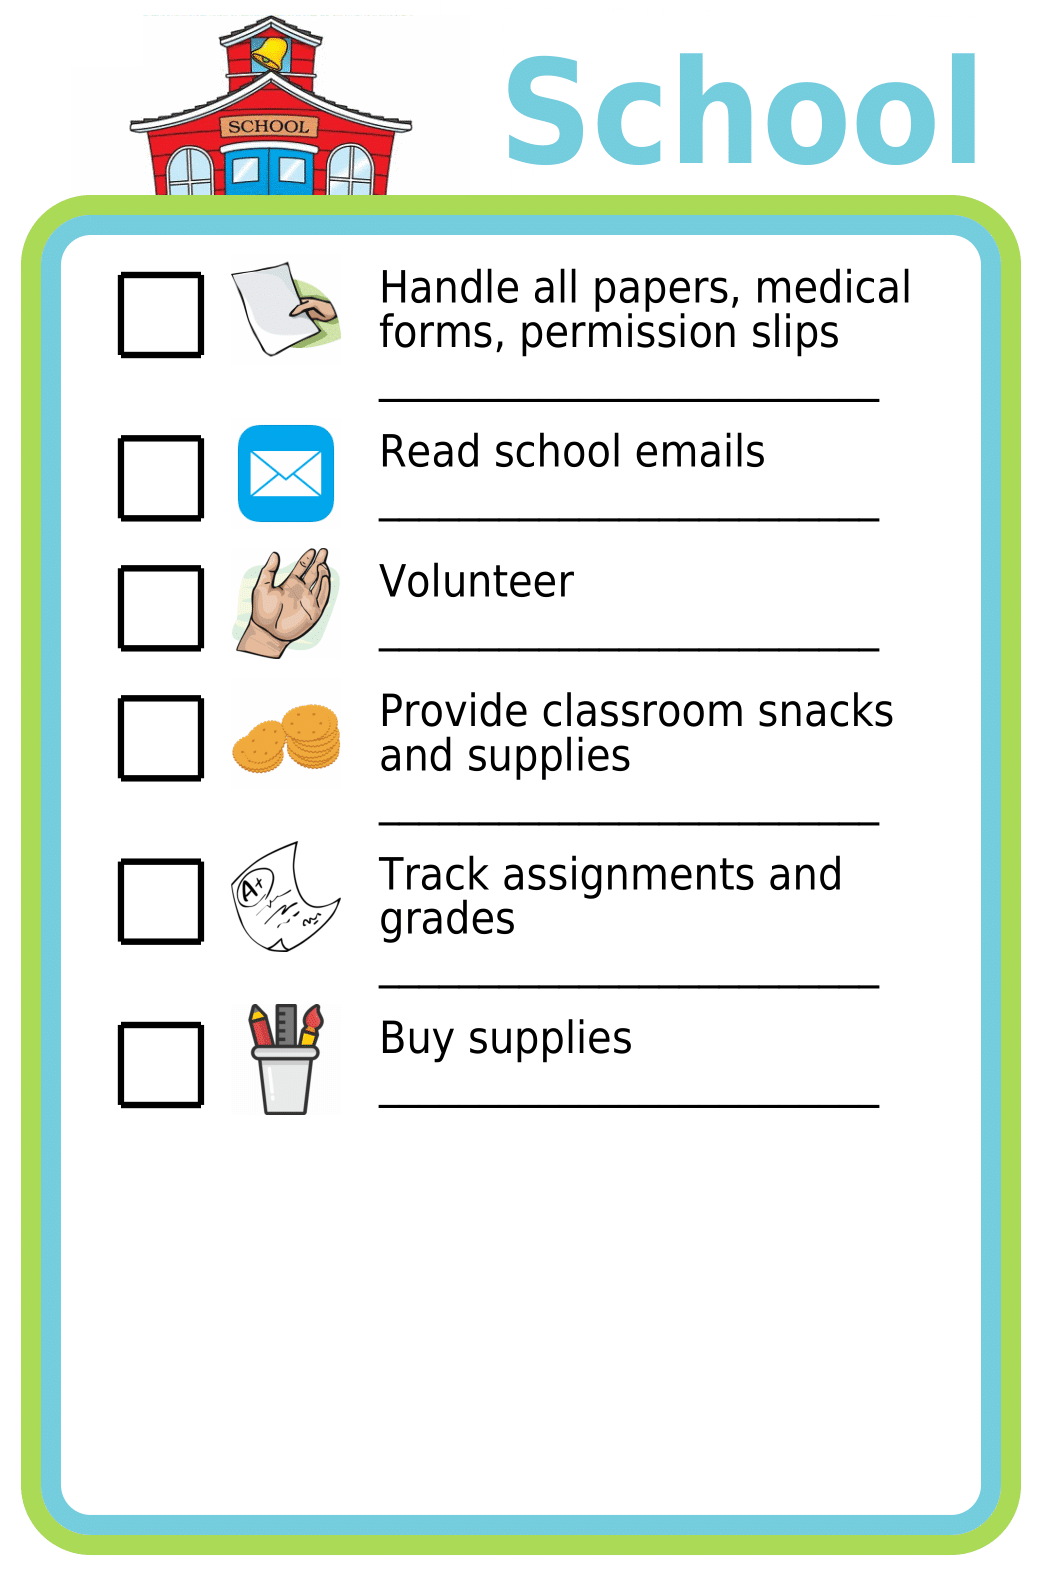 Editable worksheet showing 6 school-related tasks: paperwork, emails, volunteering, snacks and supplies, homework and grades